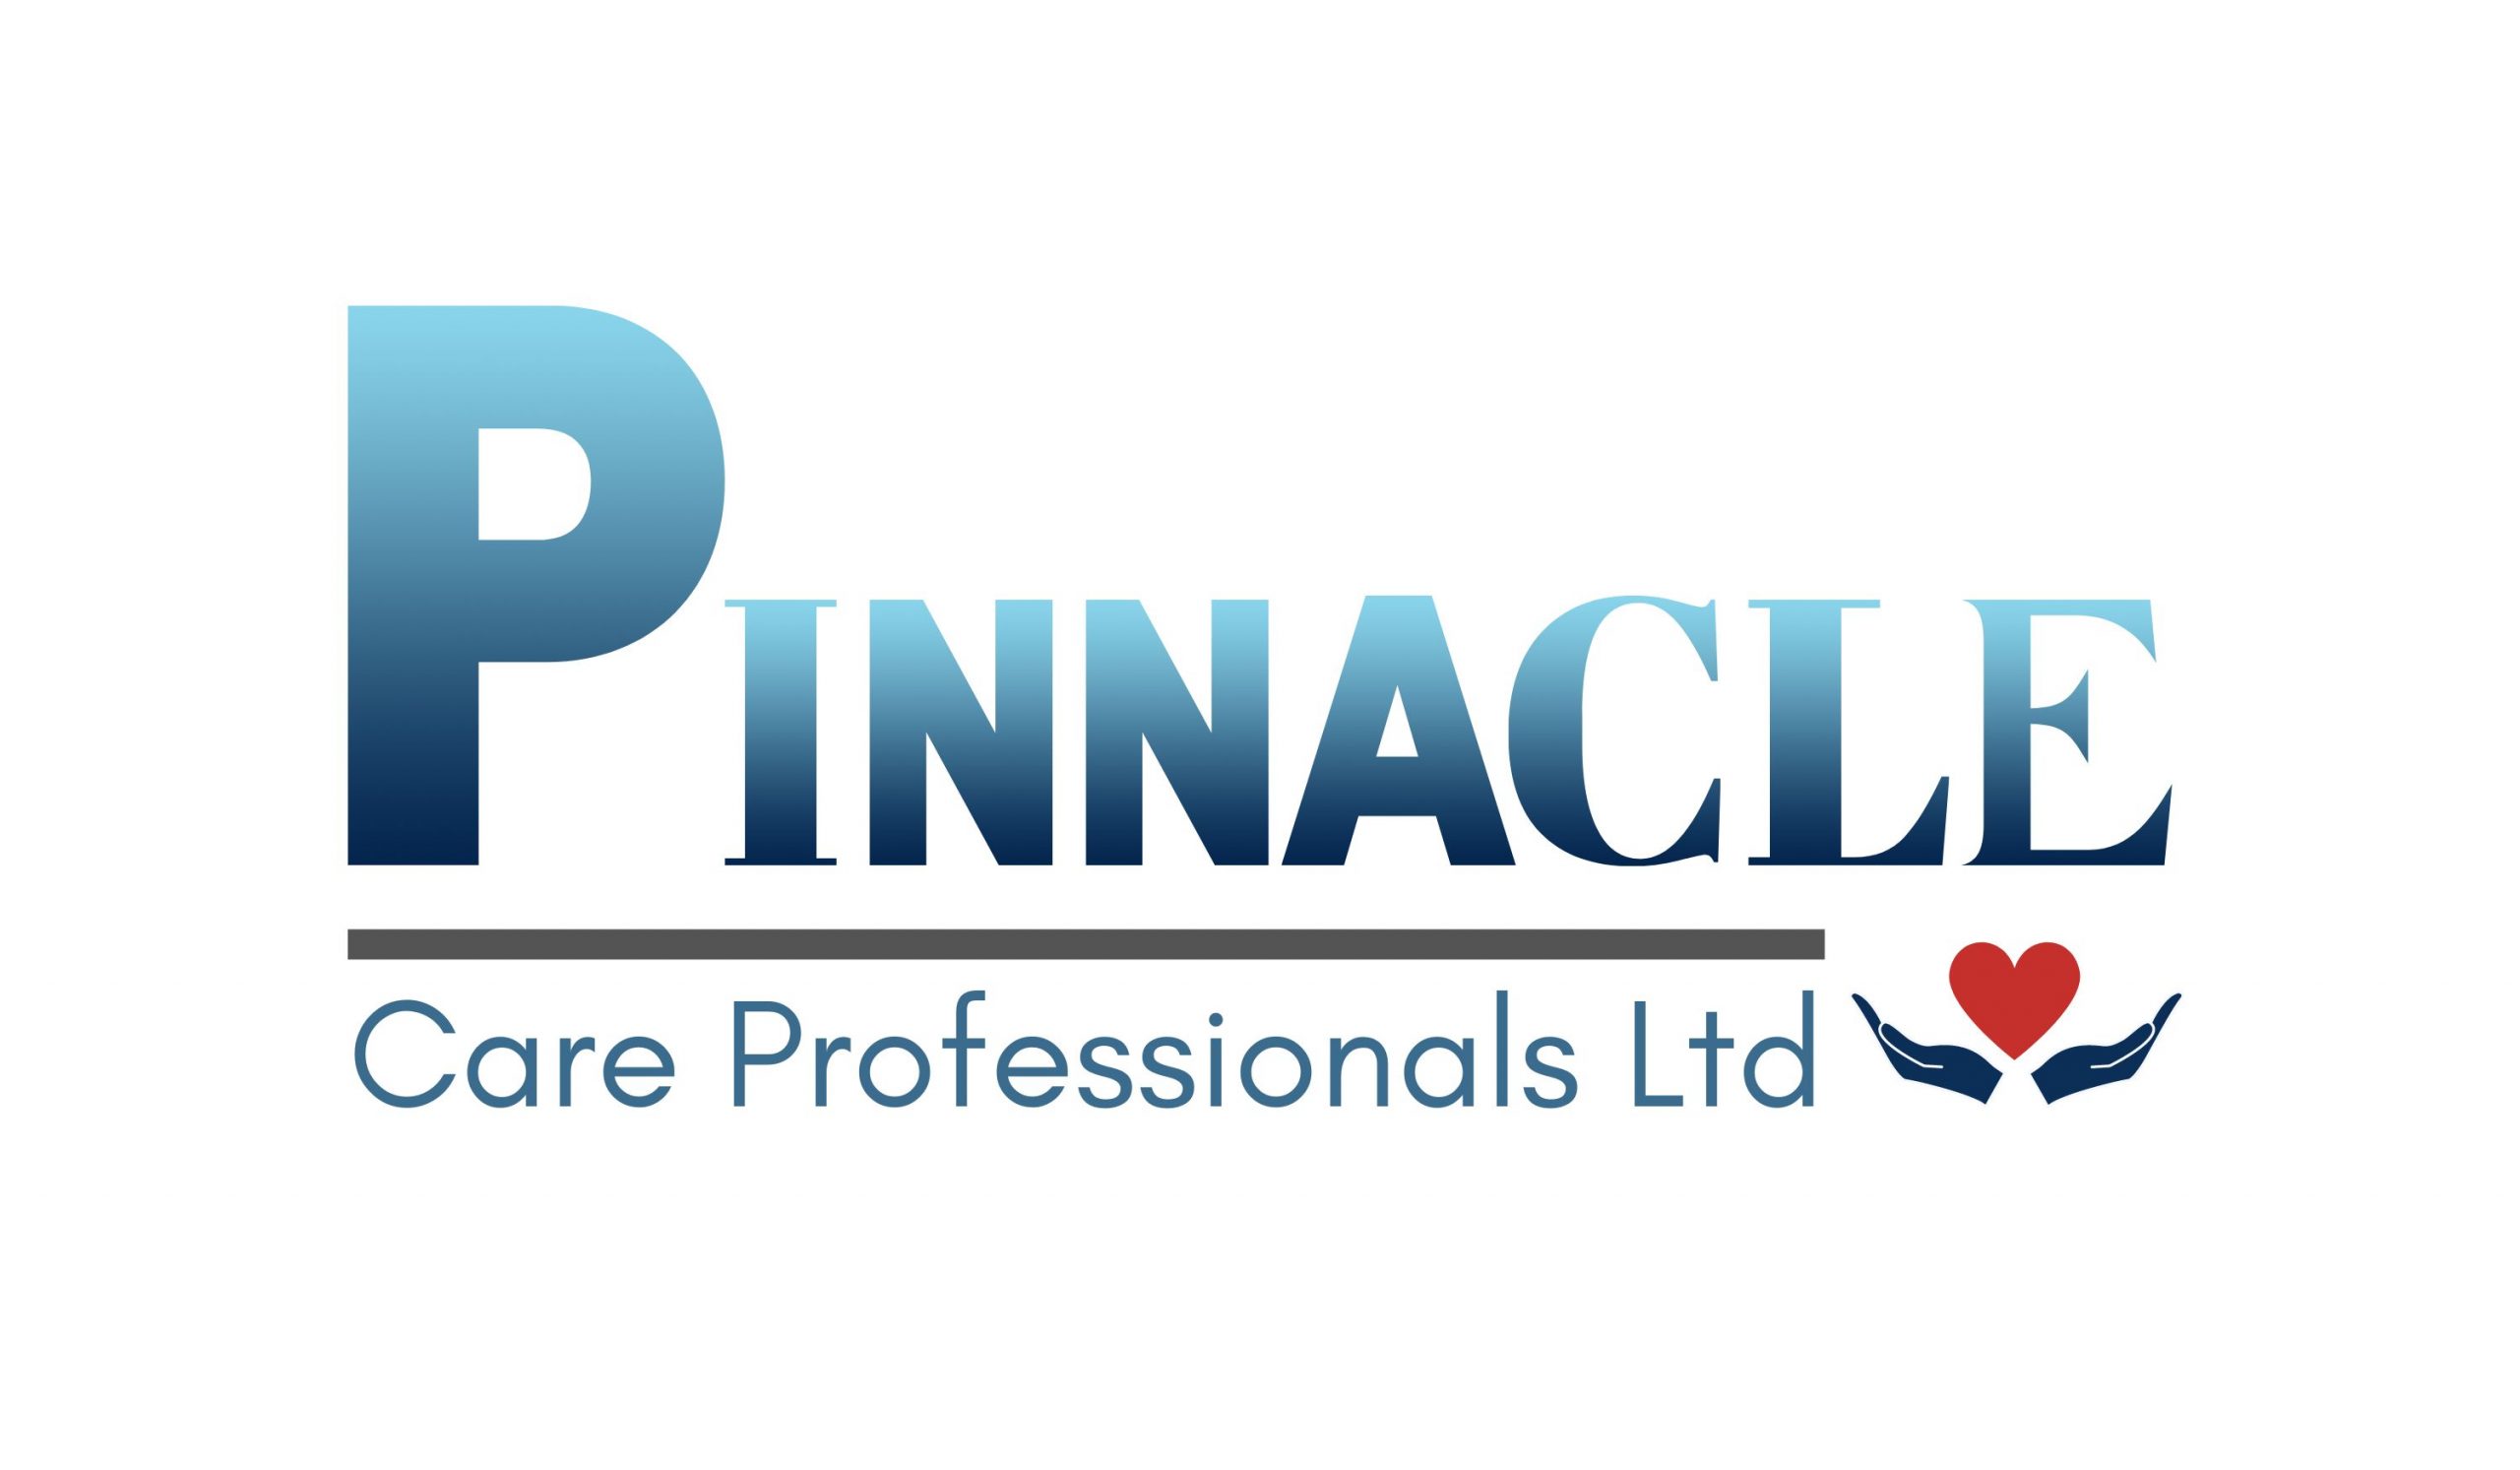 Pinnacle Care Professionals Ltd